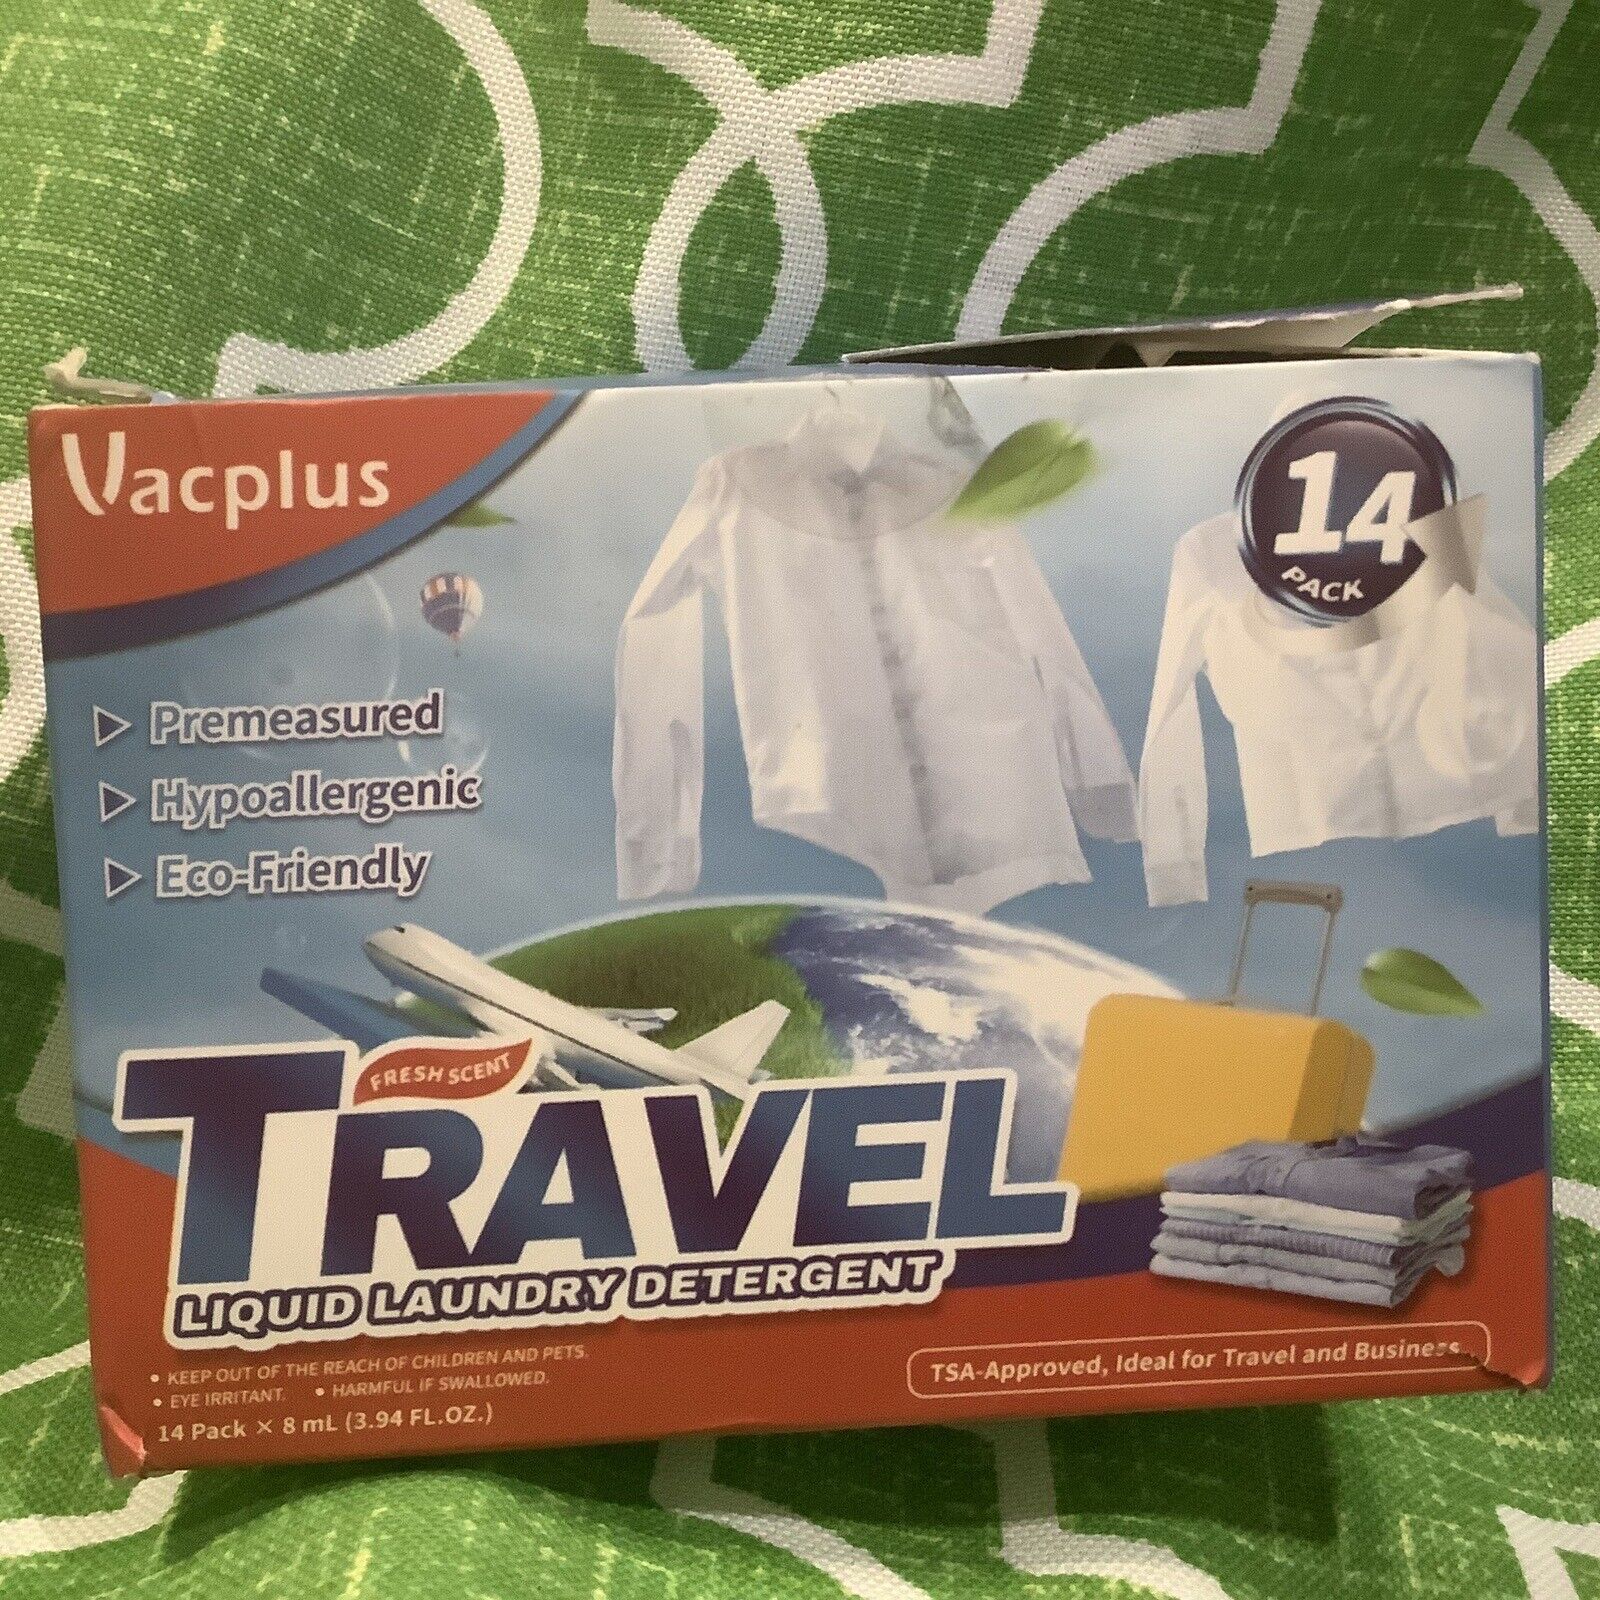 Vacplus Travel Liquid Laundry Detergent 14 Single Packs Vacation Fresh Scent